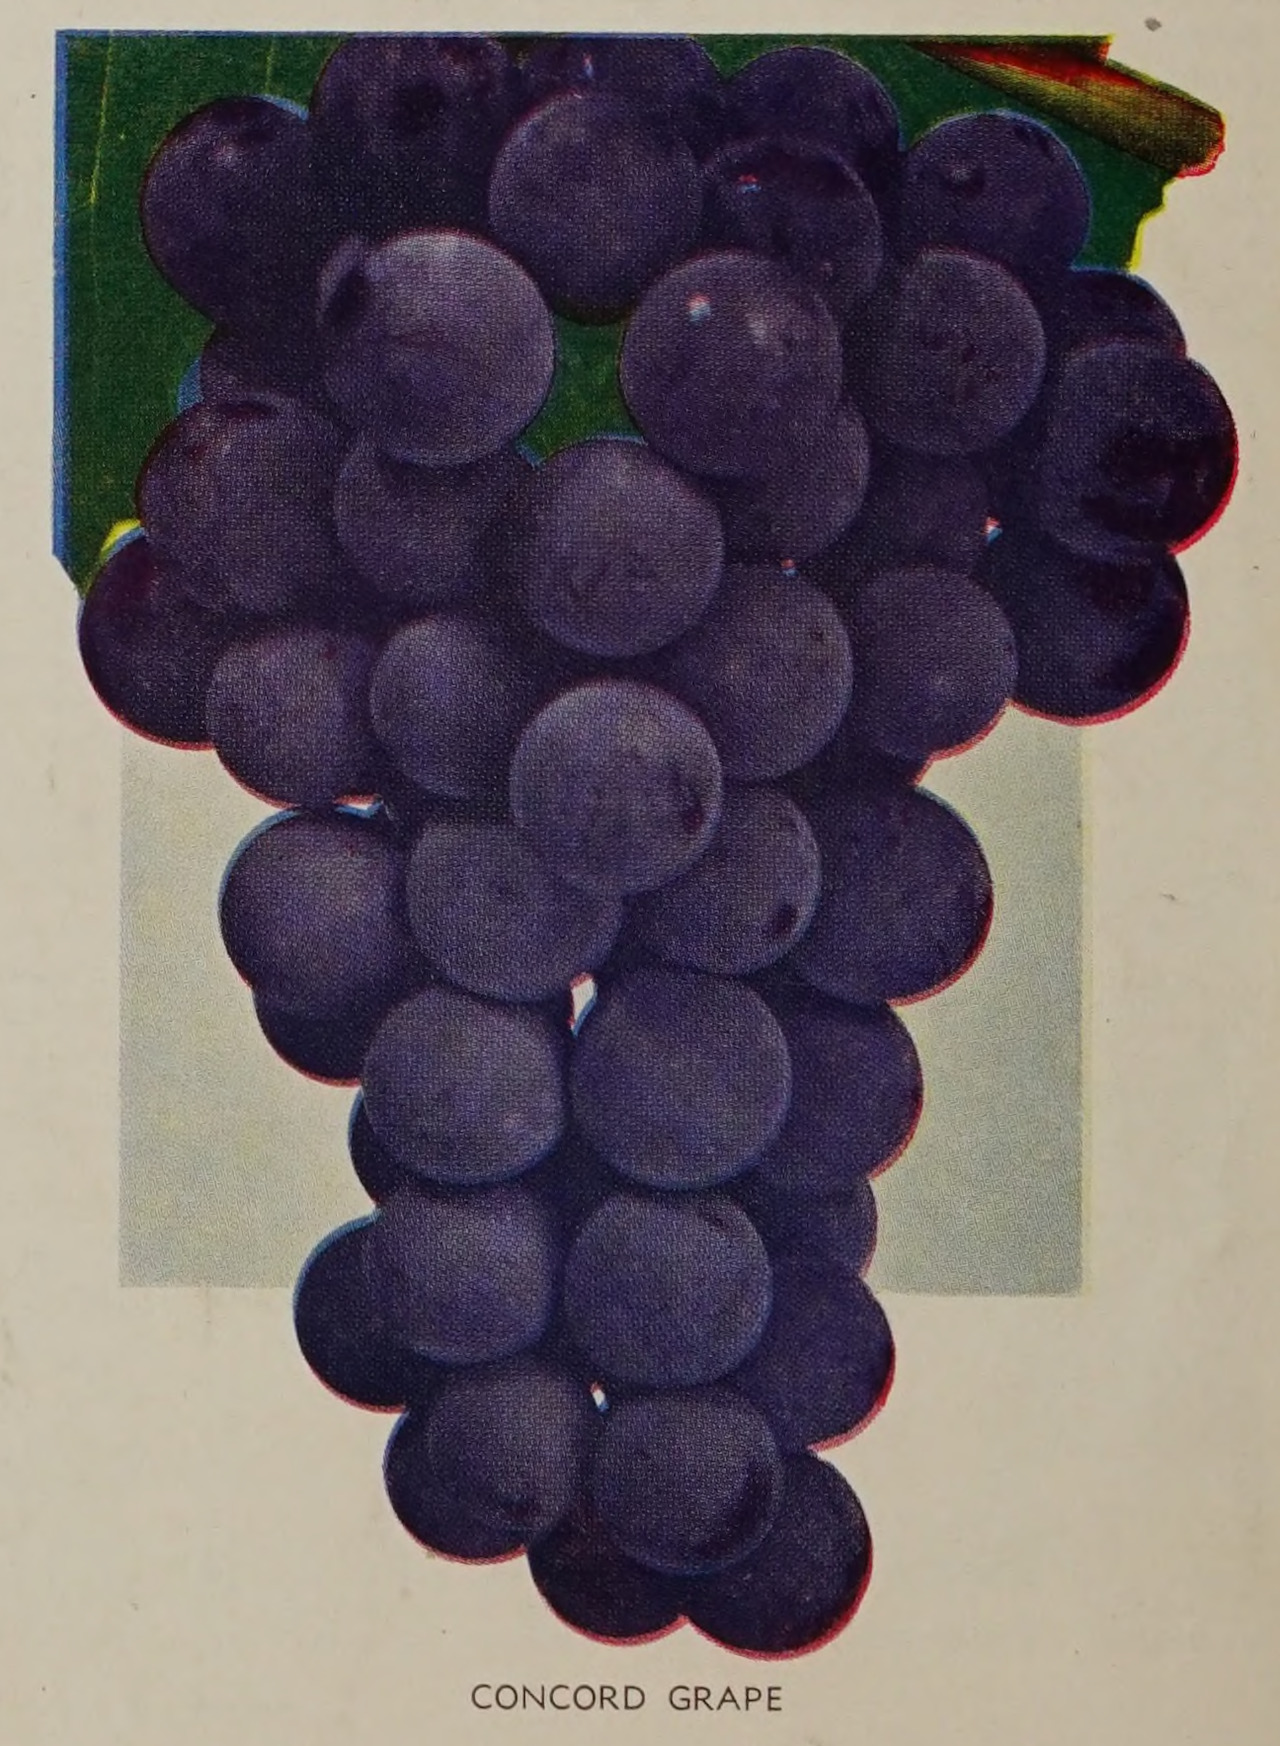 Concord Grape. Striblings Nurseries. 1949.Internet Archive #grapes#purple#concord#garden catalog#fruit#nemfrog#1949#1940s